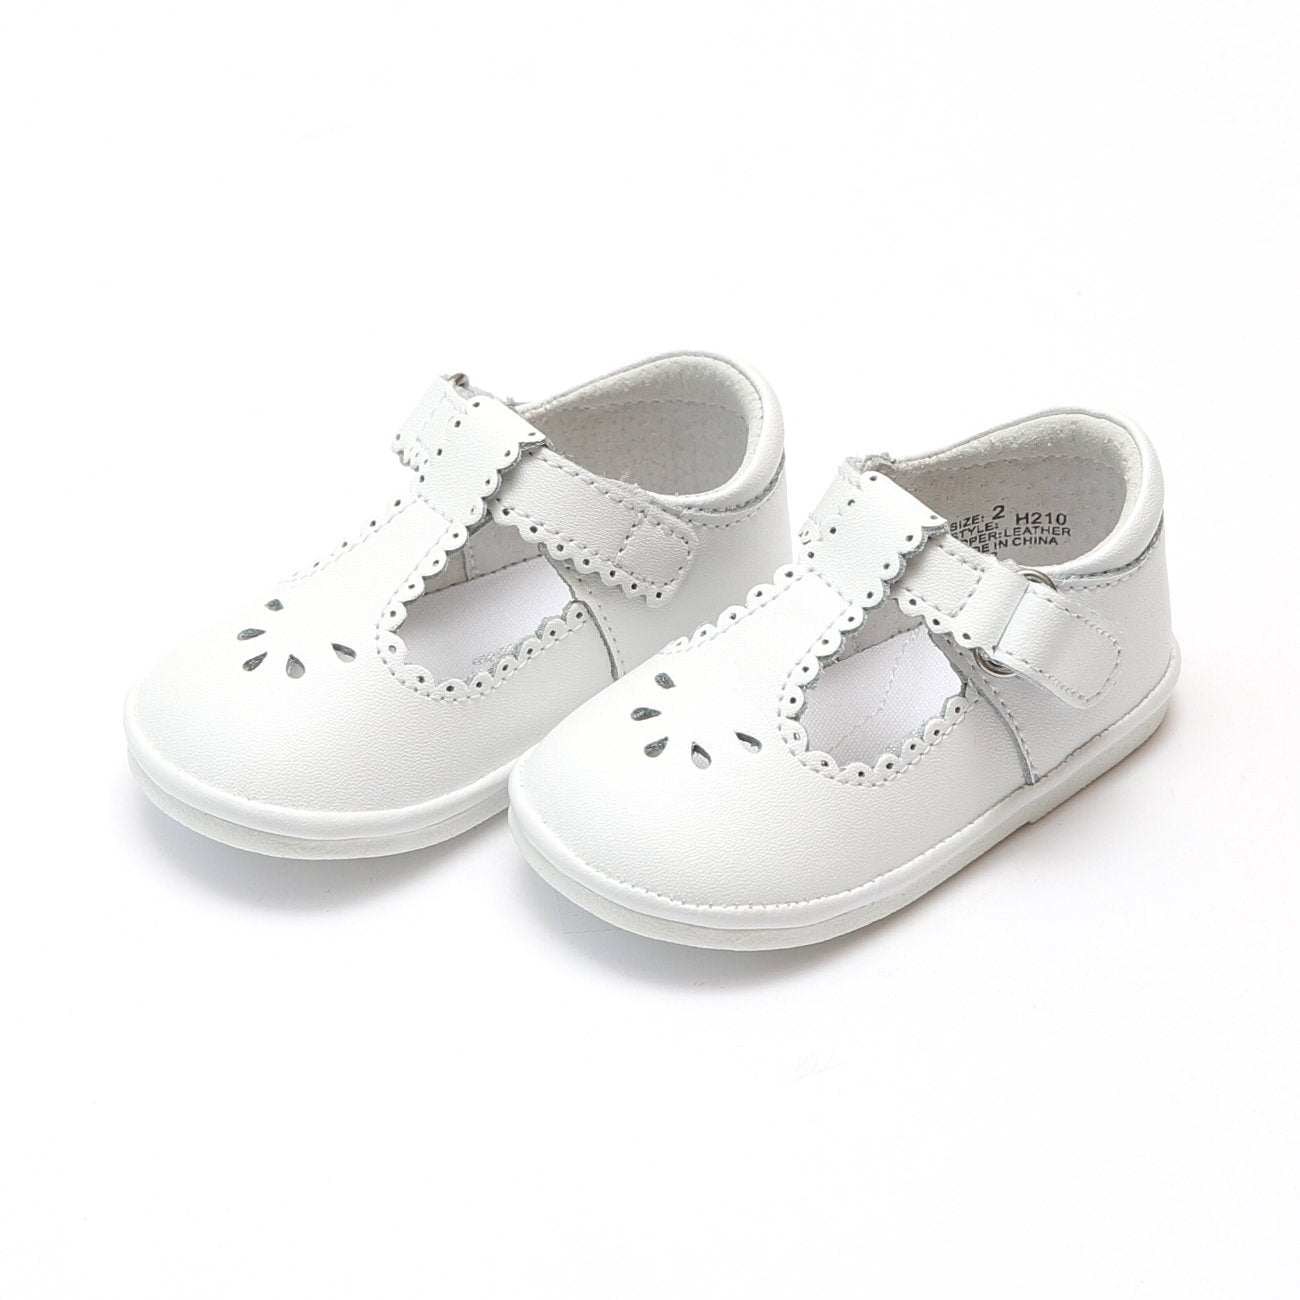 Dottie Mary Jane Shoes L'Amour White 1 